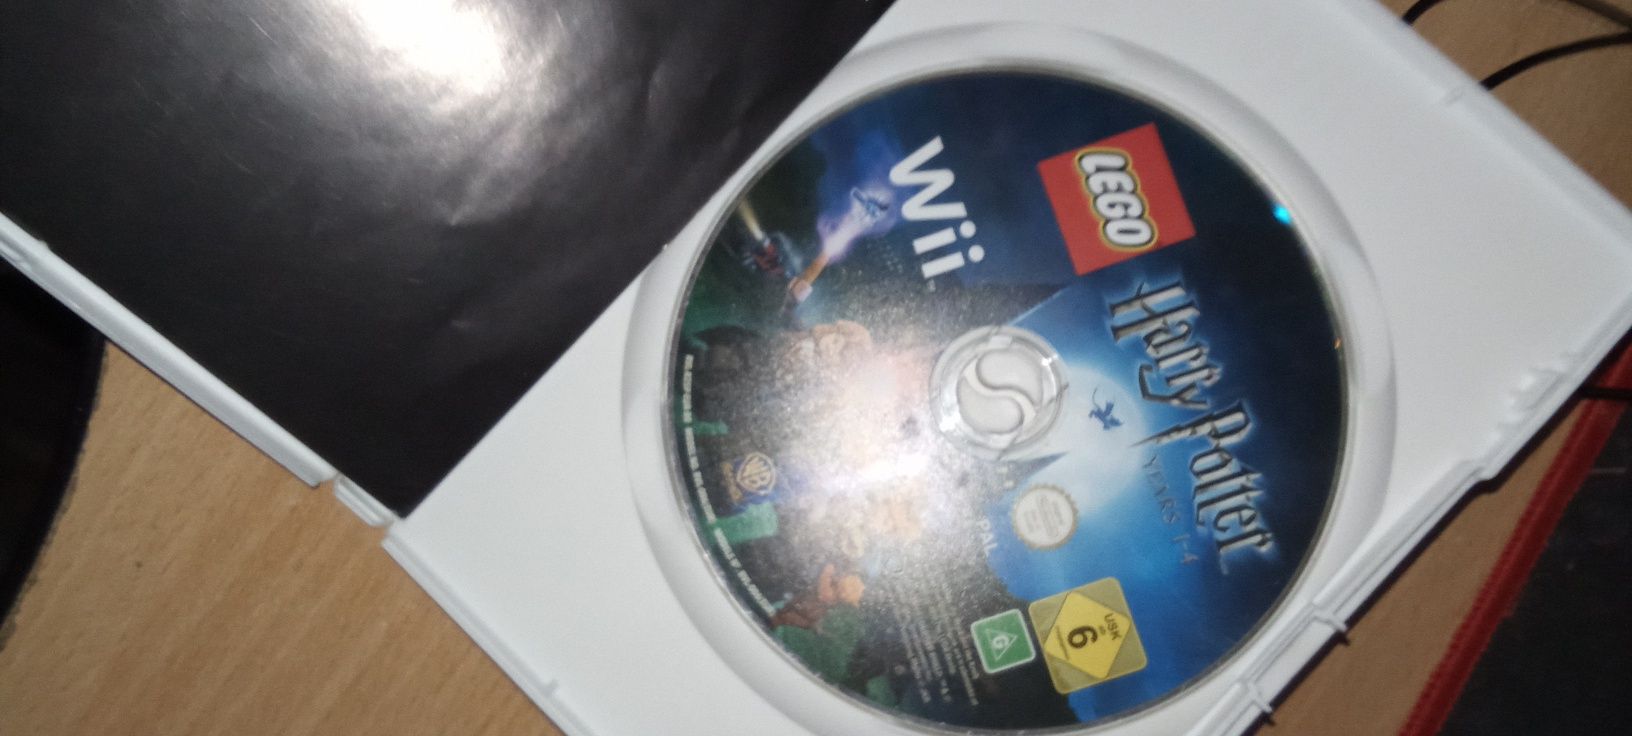 Cd-uri wii Nintendo Wii